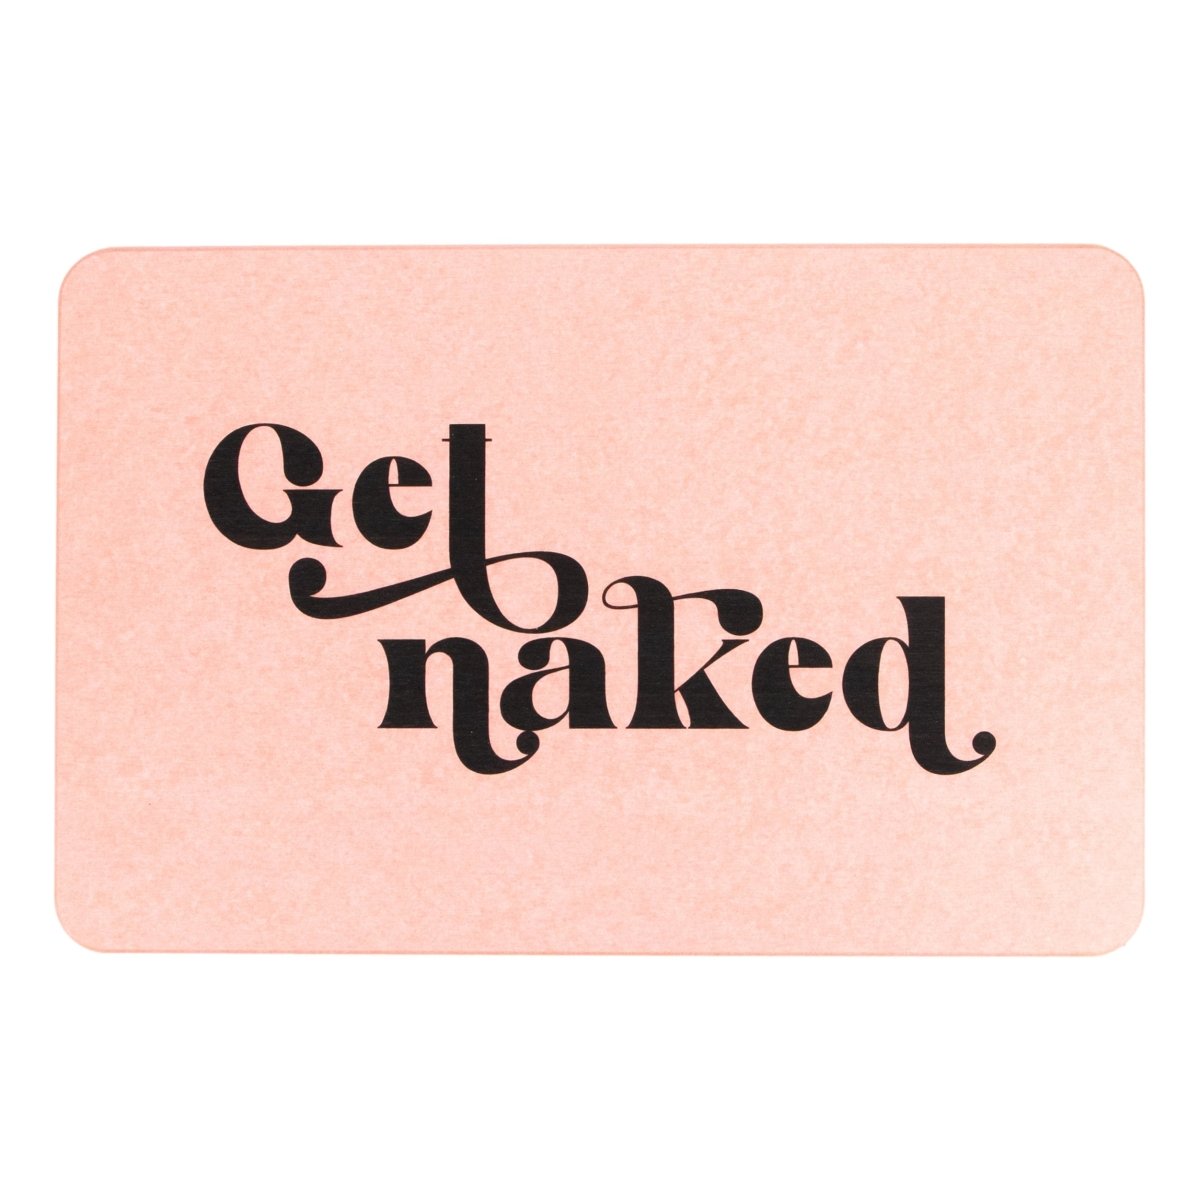 Get Naked Bathmat - Pink Stone Non Slip Bath Mat - Cute Bathroom Decor - Housewarming Gift - Funny Wedding Gift - 39 X 60Cm - Slips Away - 1330524150 -